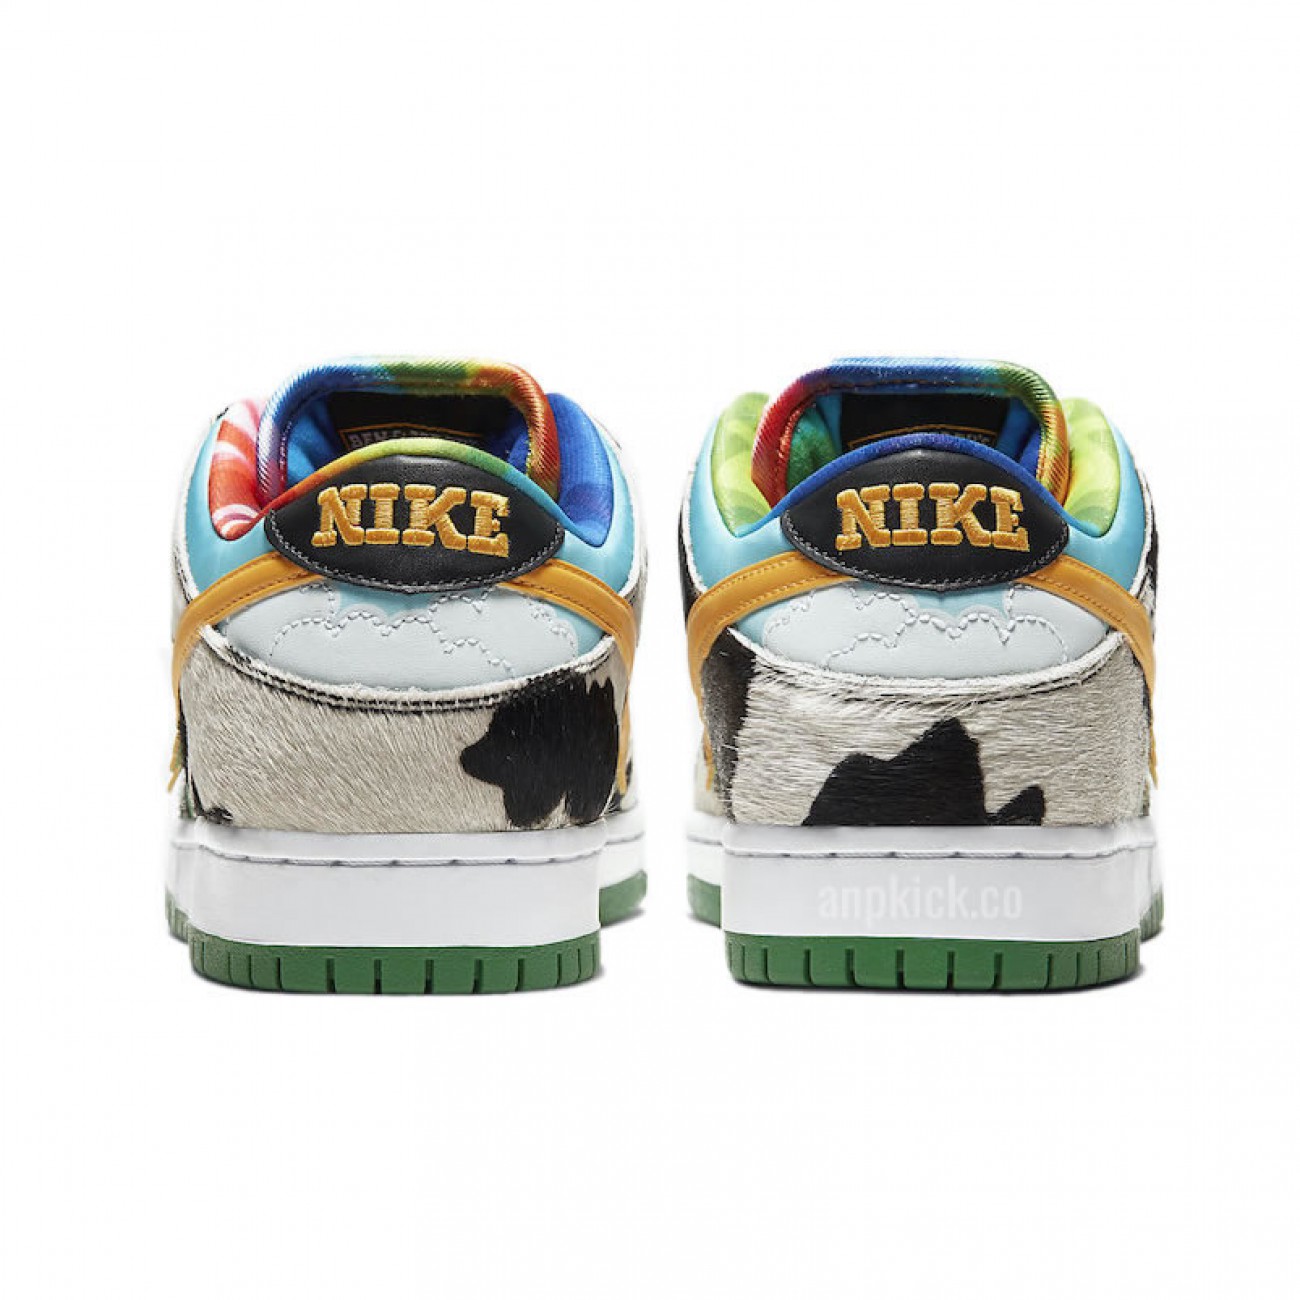 Ben & Jerry's x Nike Dunk SB Low "Chunky Dunky" CU3244-100